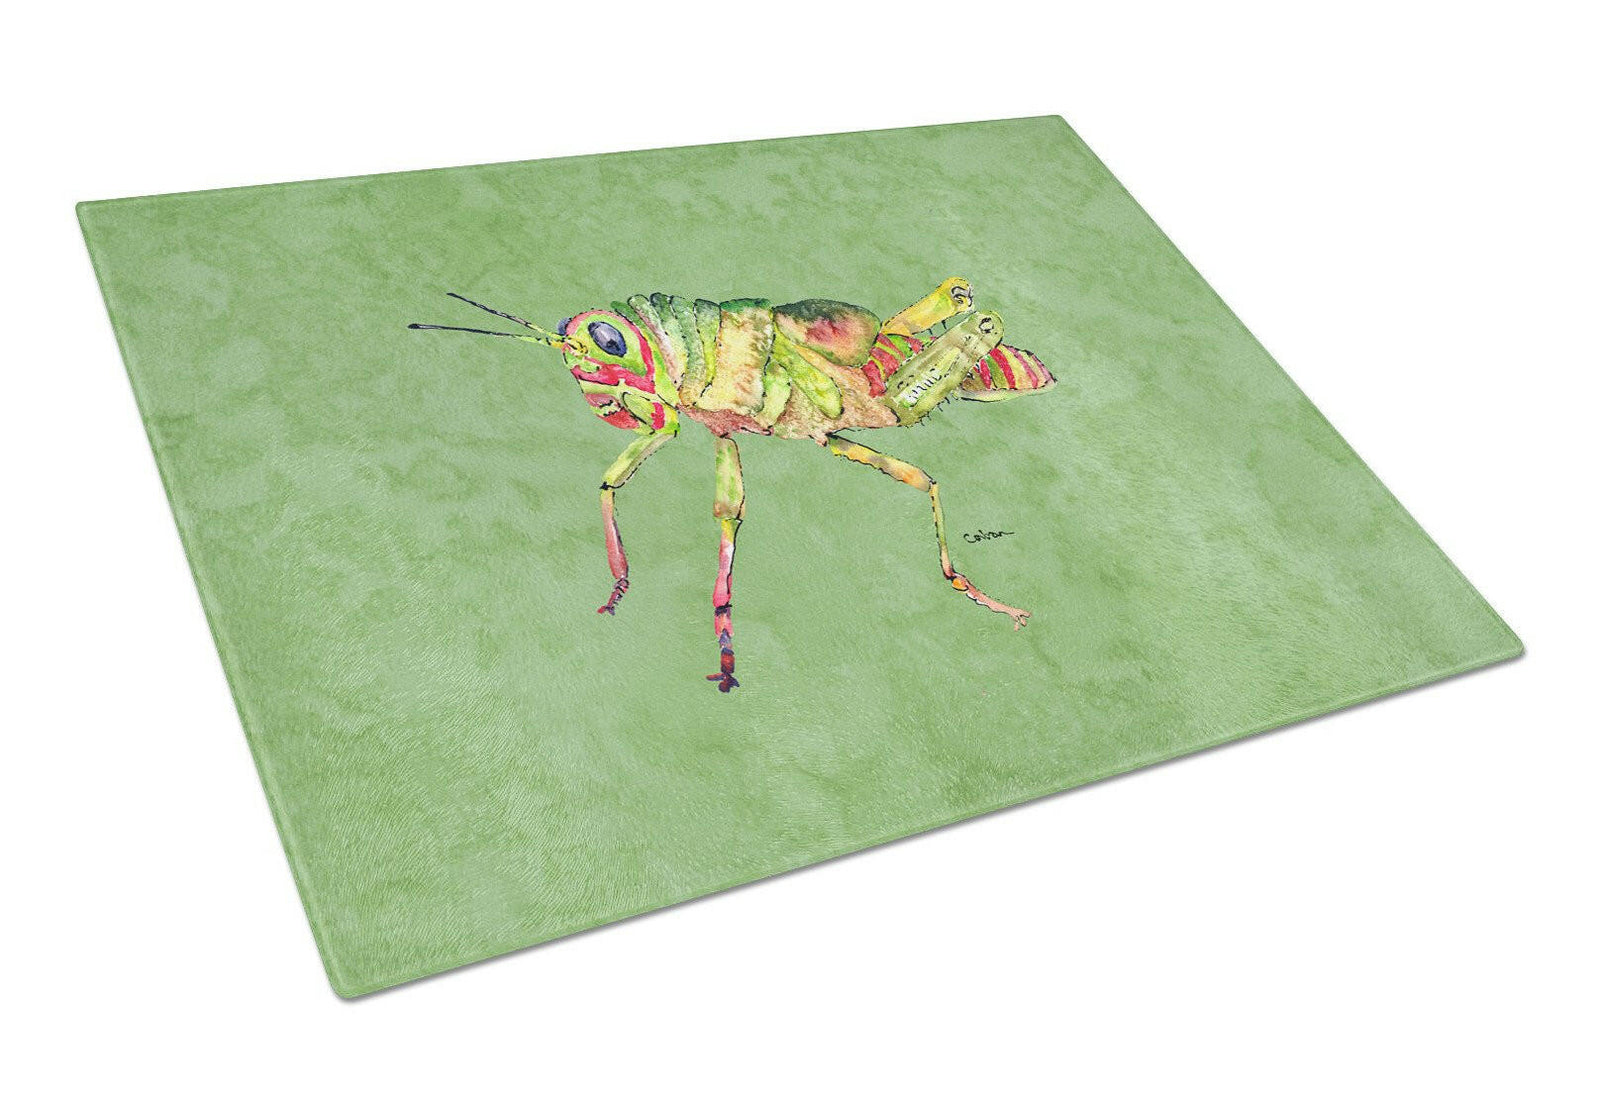 Grasshopper on Avacado Glass Cutting Board Large by Caroline's Treasures